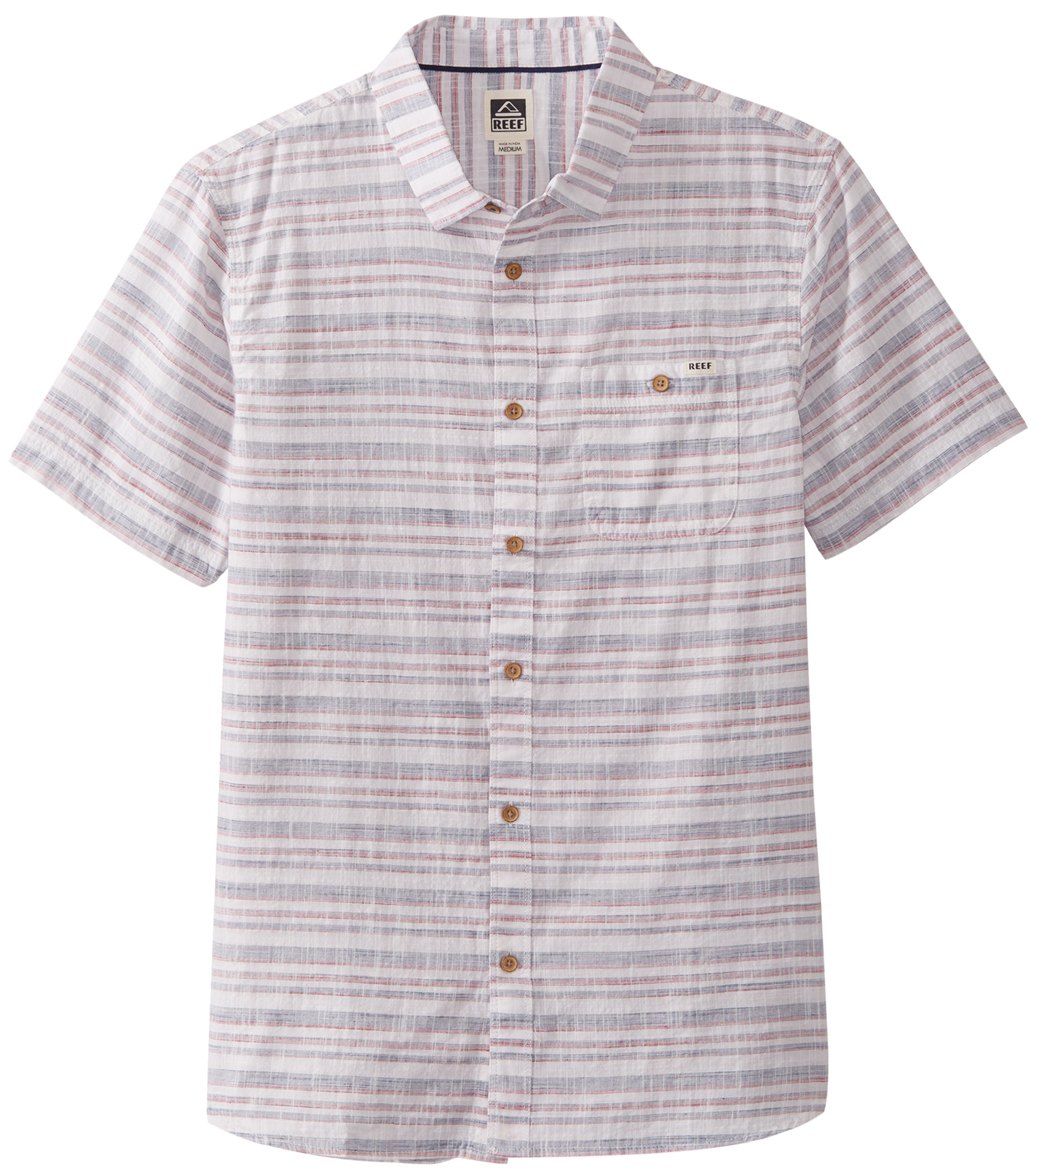 Reef Men's Horizon Short Sleeve Shirt - Natural Small Cotton - Swimoutlet.com